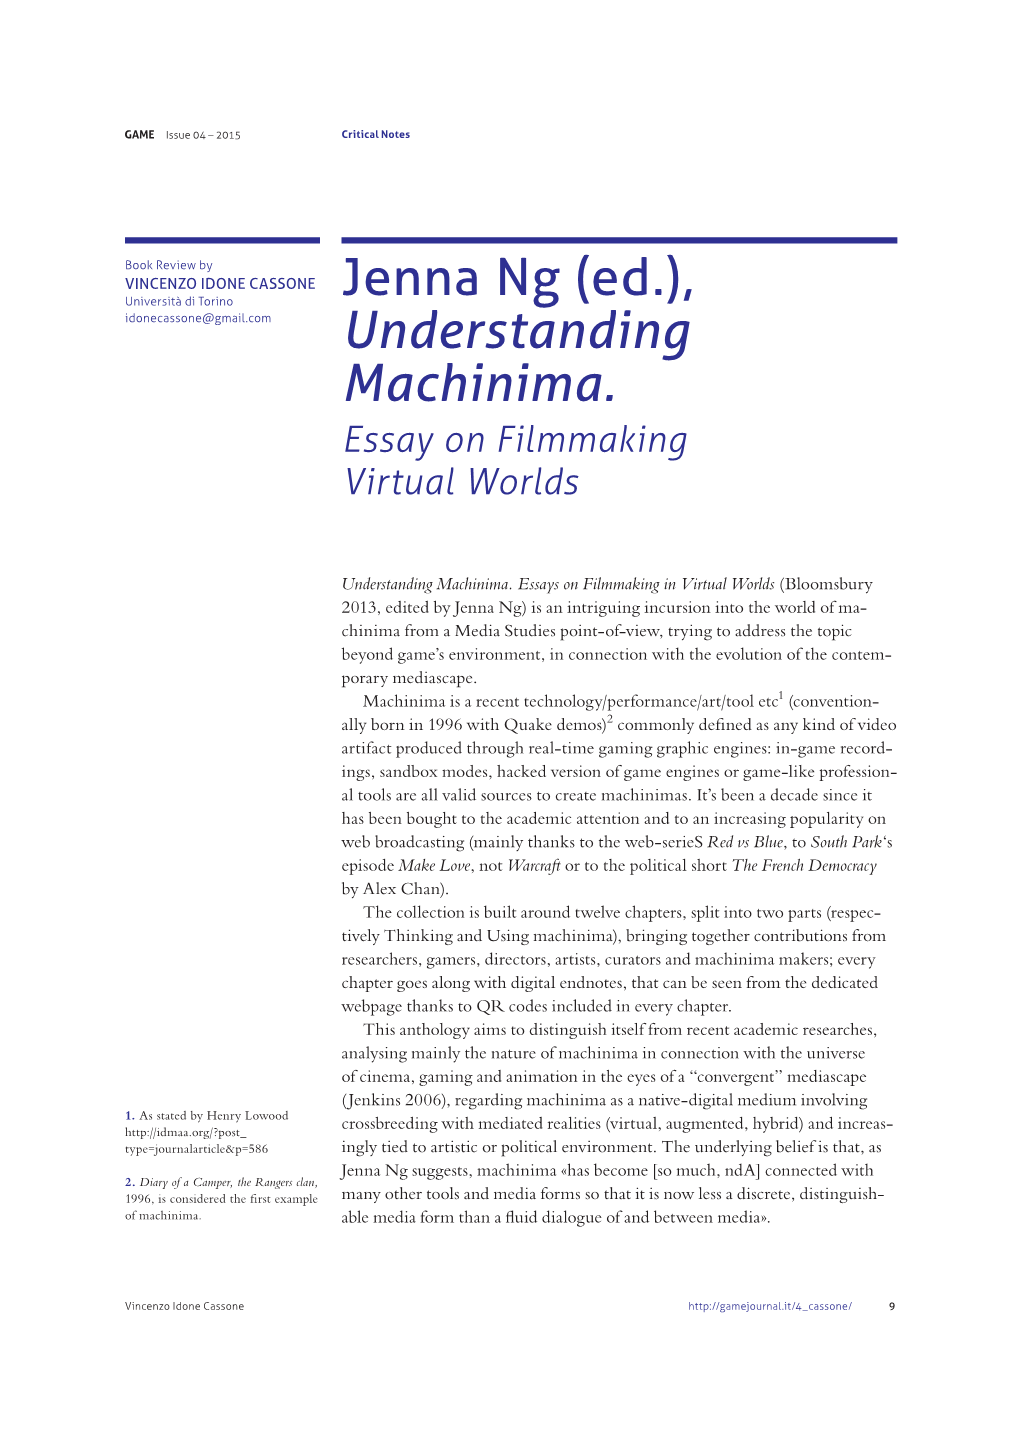 Jenna Ng (Ed.), Understanding Machinima